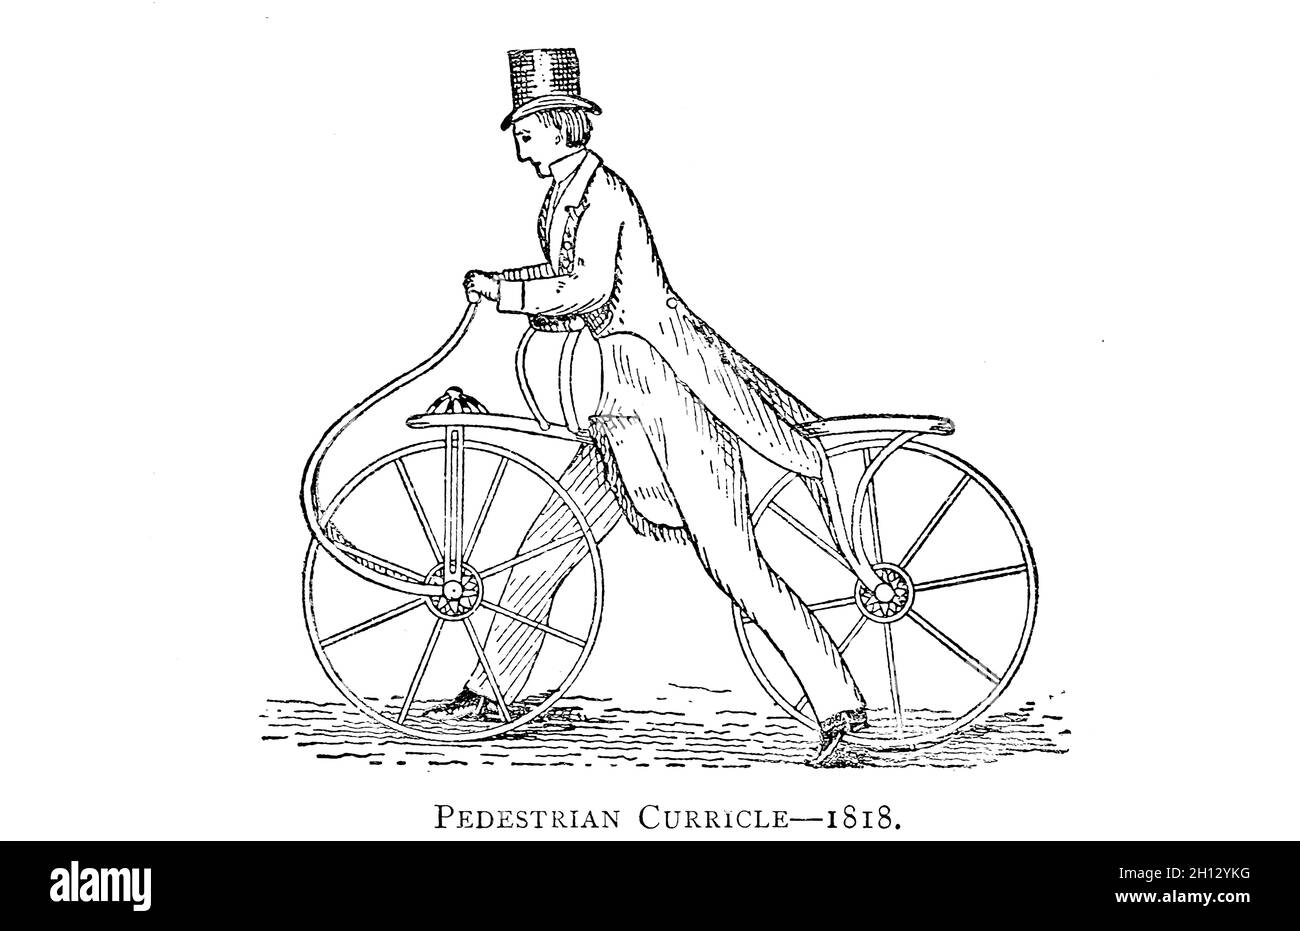 Pedestrian curricle, 19th century illustration Stock Photo